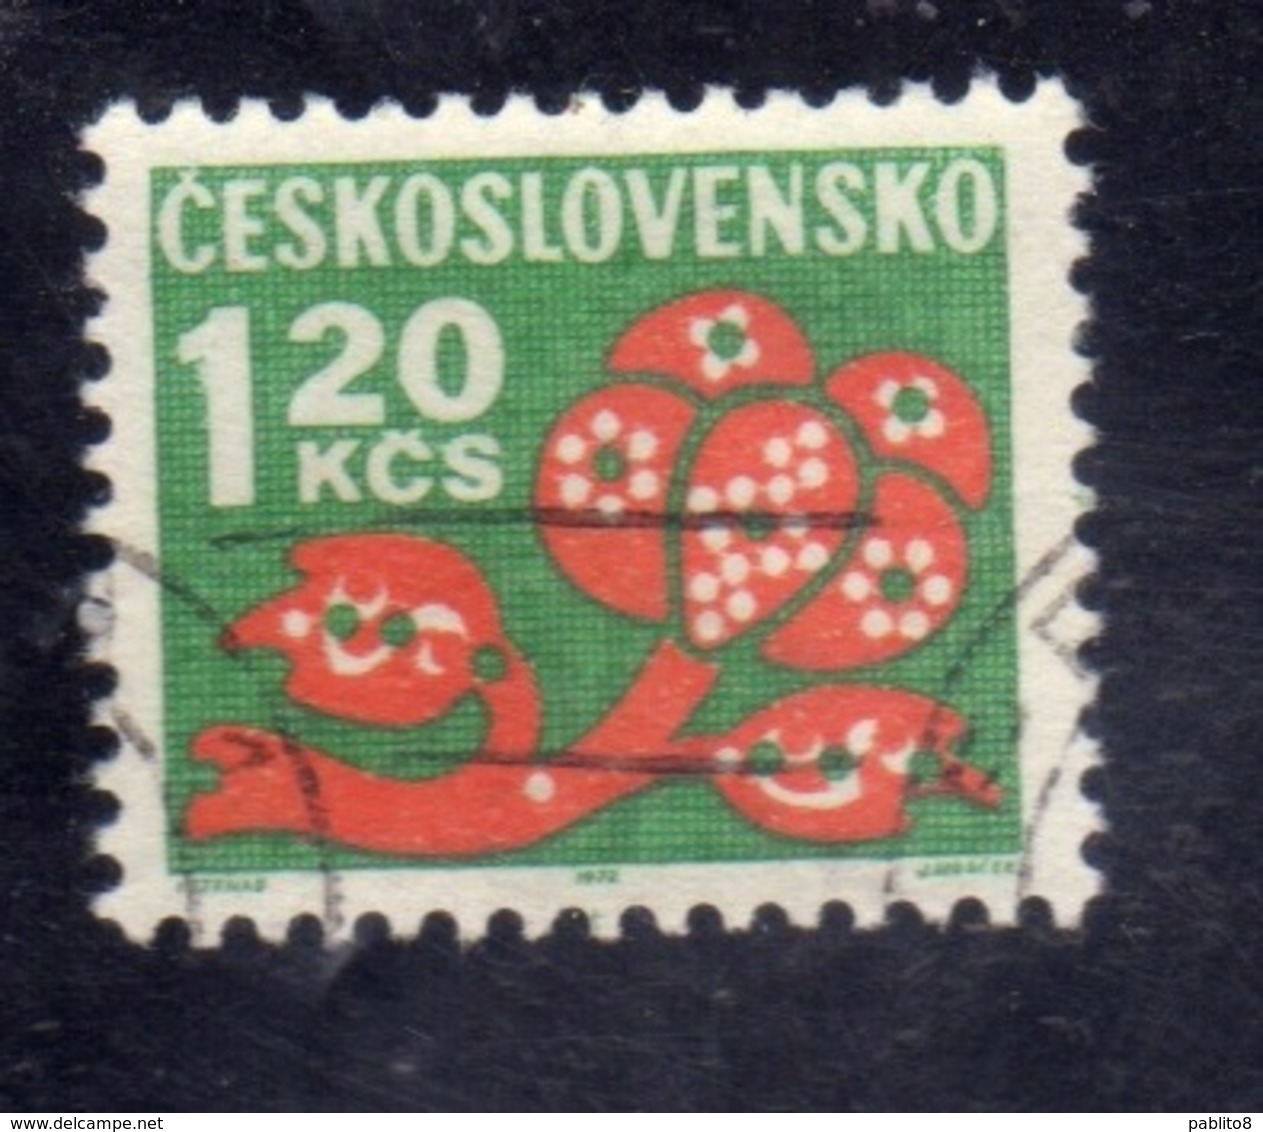 CZECHOSLOVAKIA CESKOSLOVENSKO CECOSLOVACCHIA 1971 1972 POSTAGE DUE STAMPS TASSE STYLIZED FLOWER1.20k USED USATO OBLITERE - Segnatasse